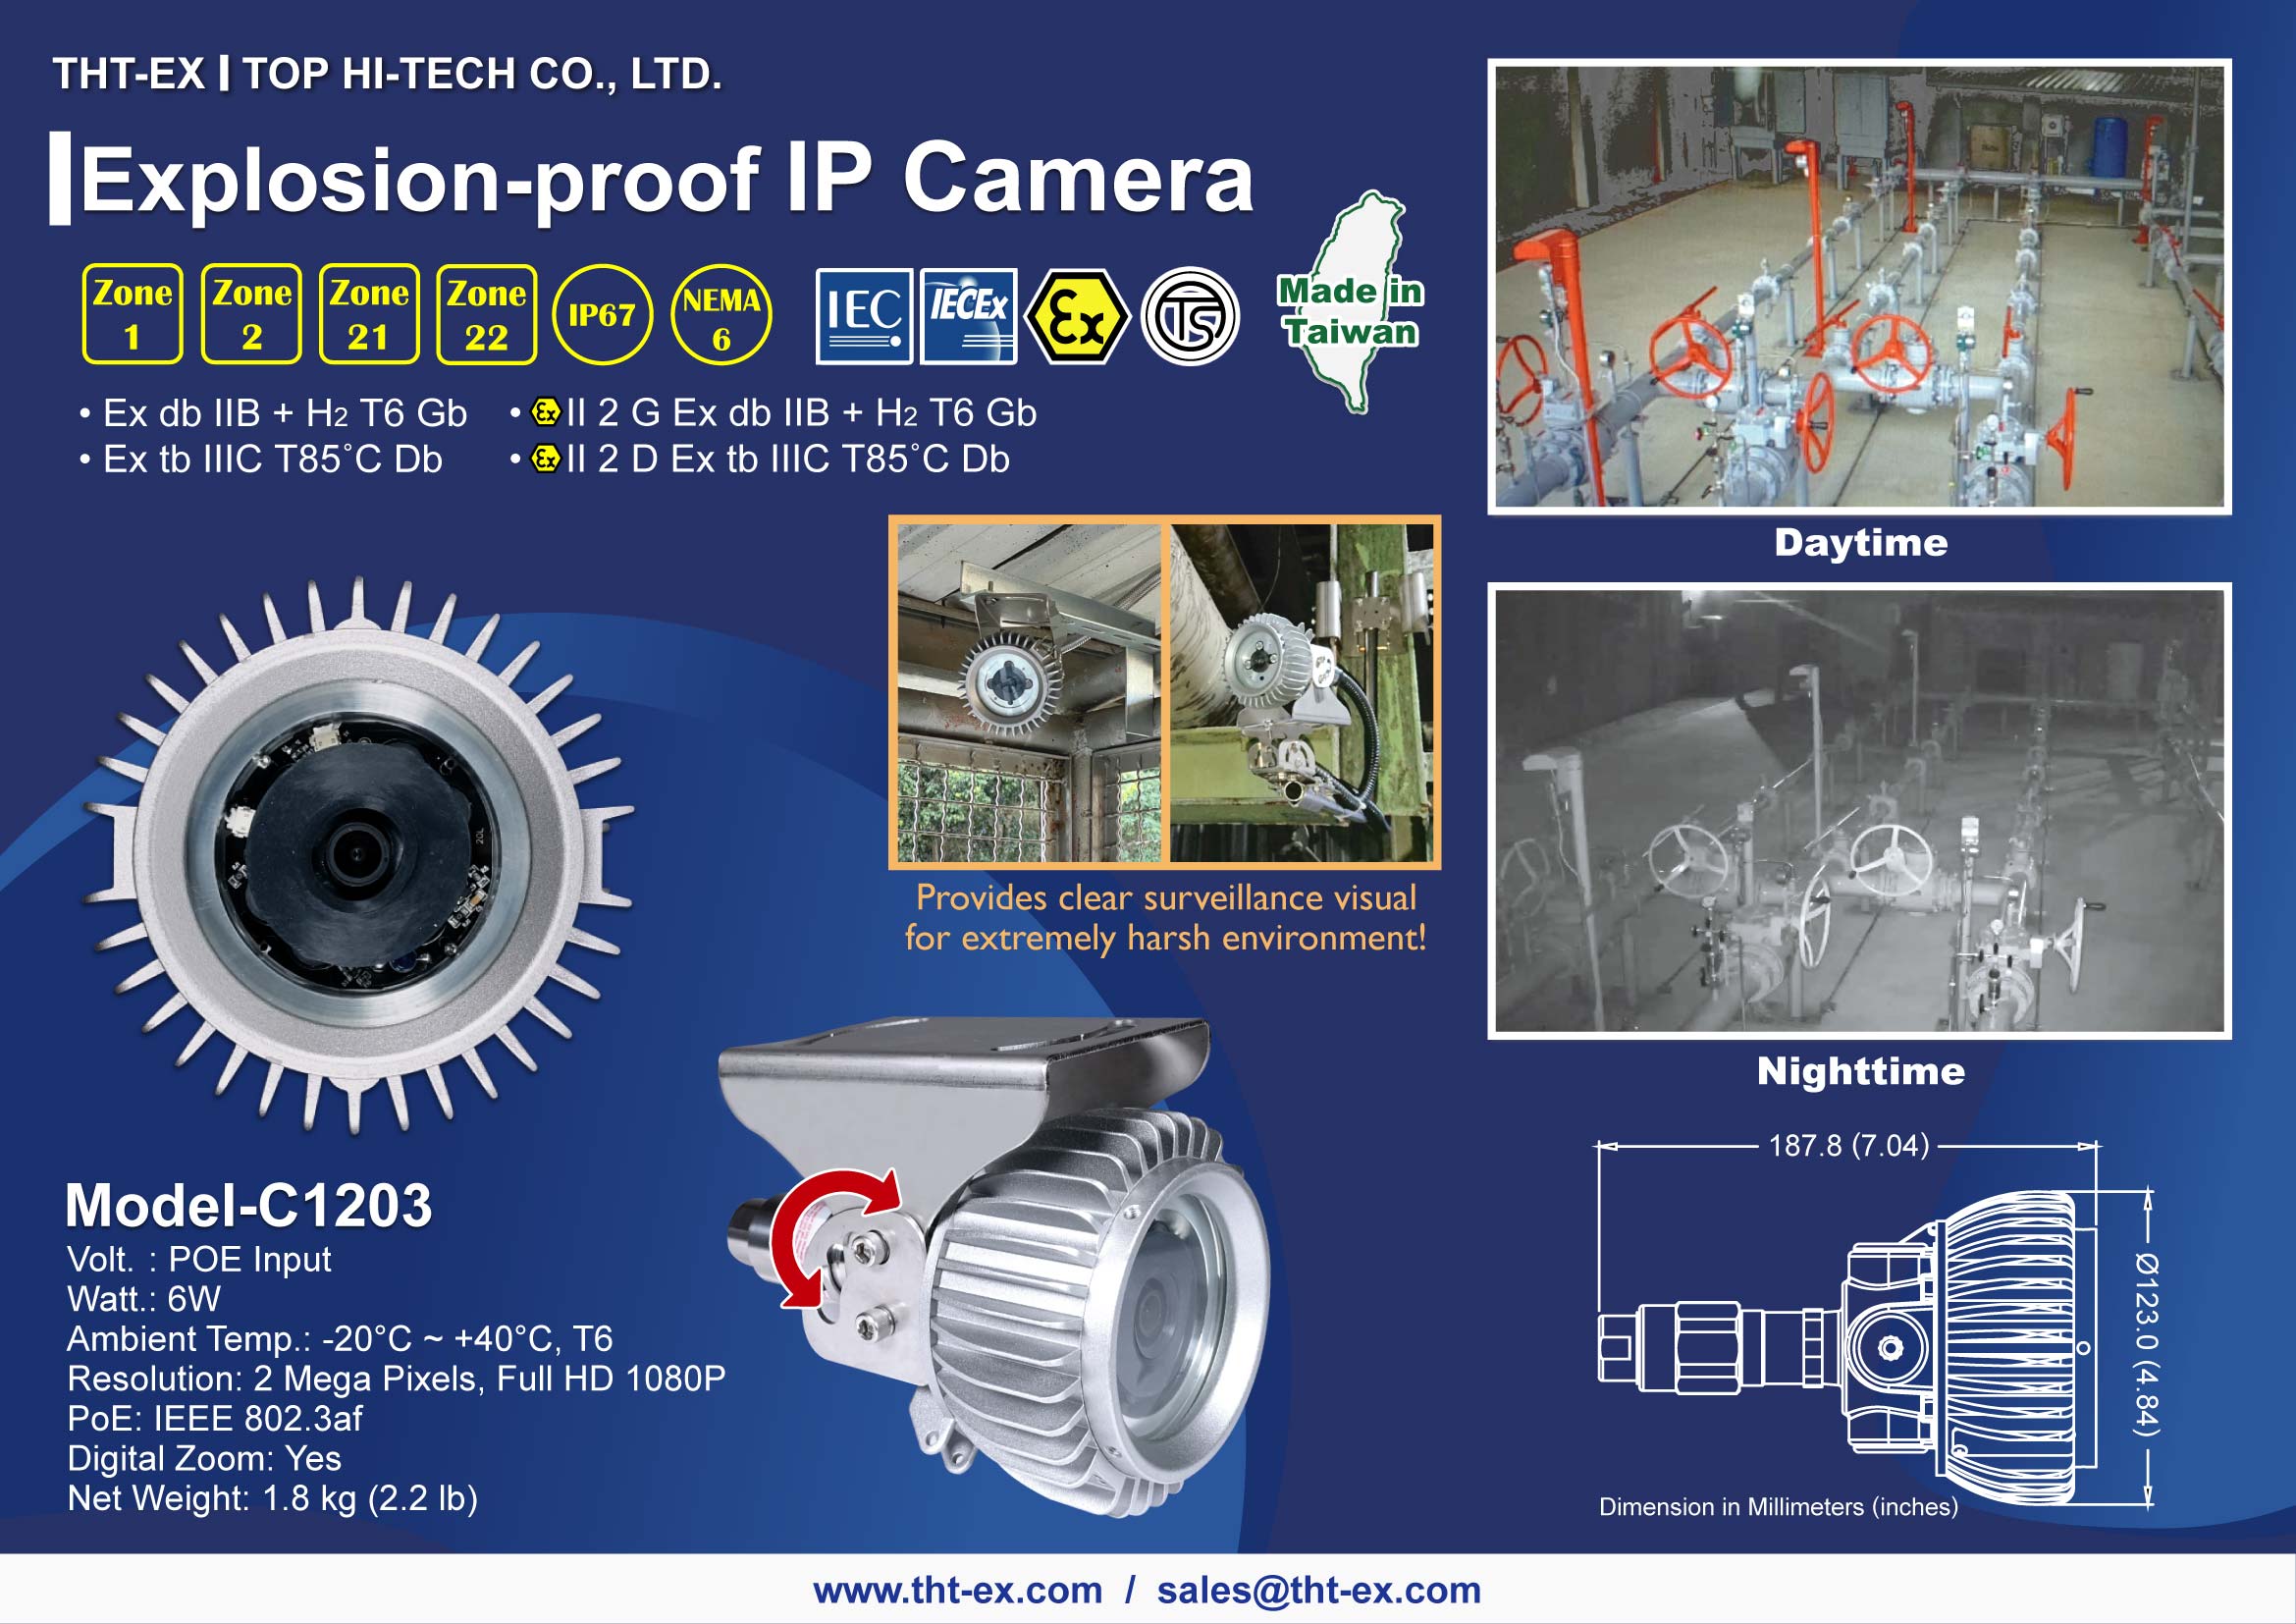 Explosion-proof IP Camera for Zone1, Zone 2 Hazardous Areas